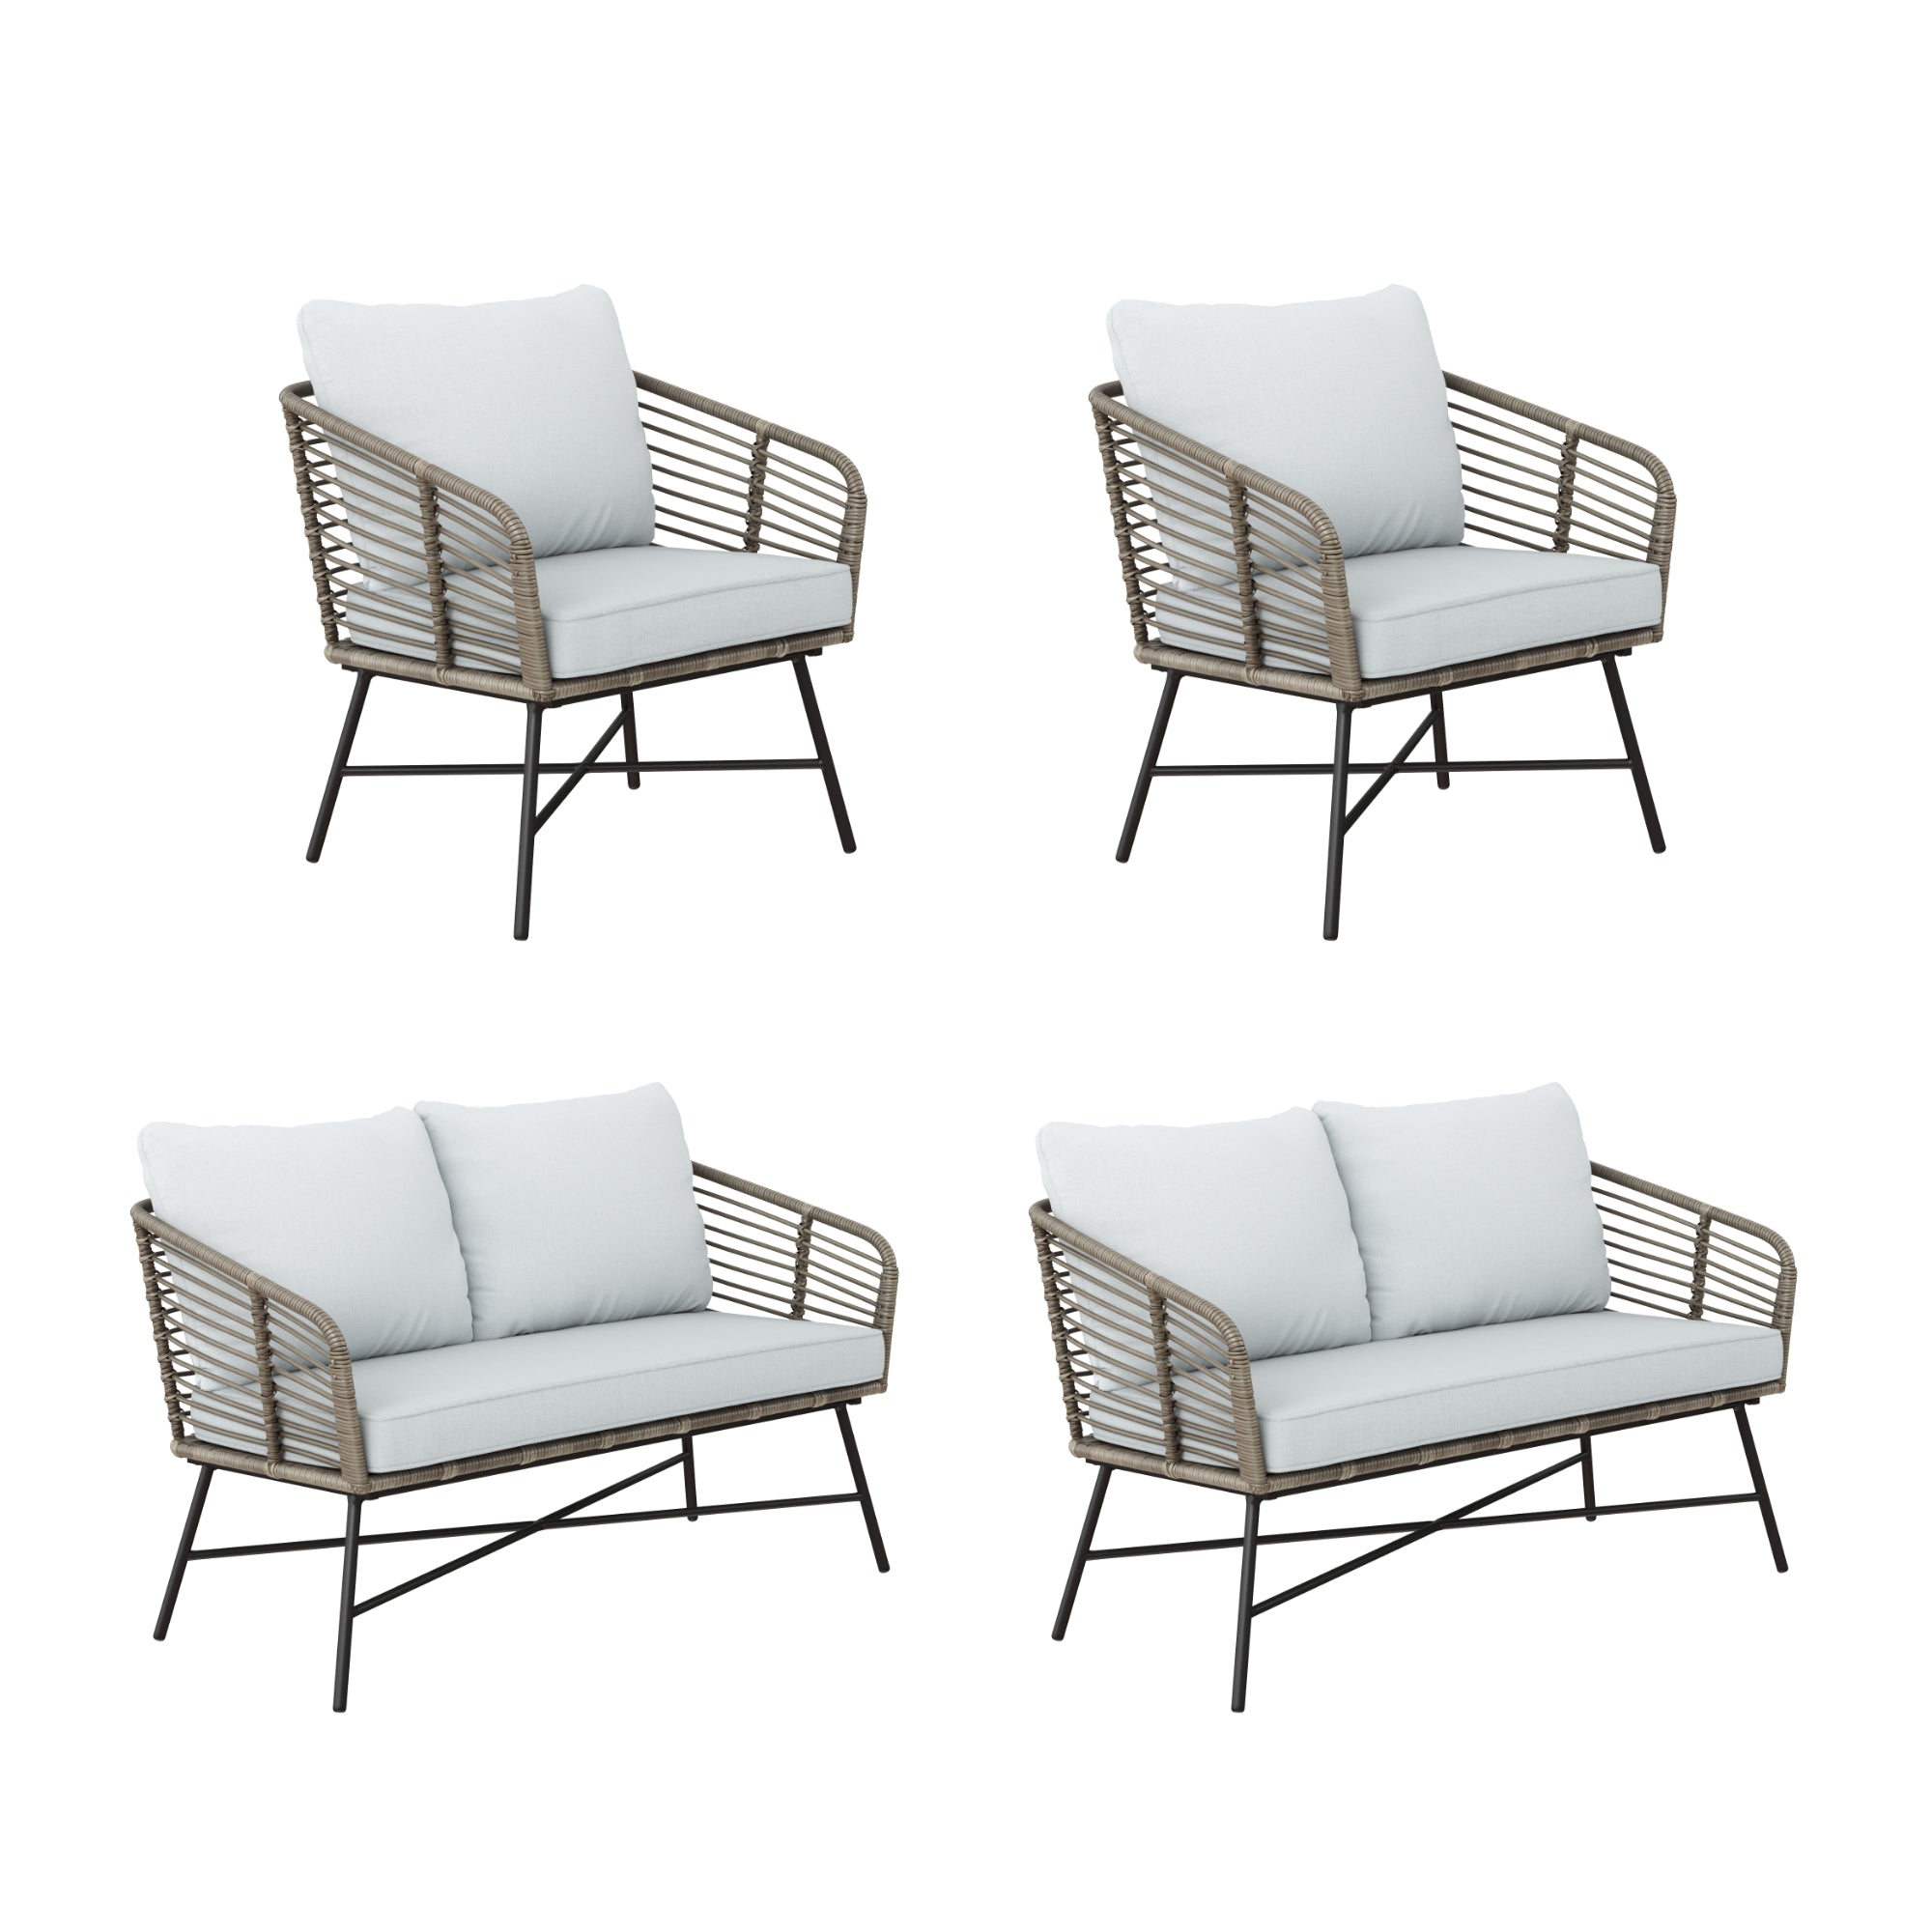 Set of 2 Outdoor Loveseats & 2 Chairs Light Gray